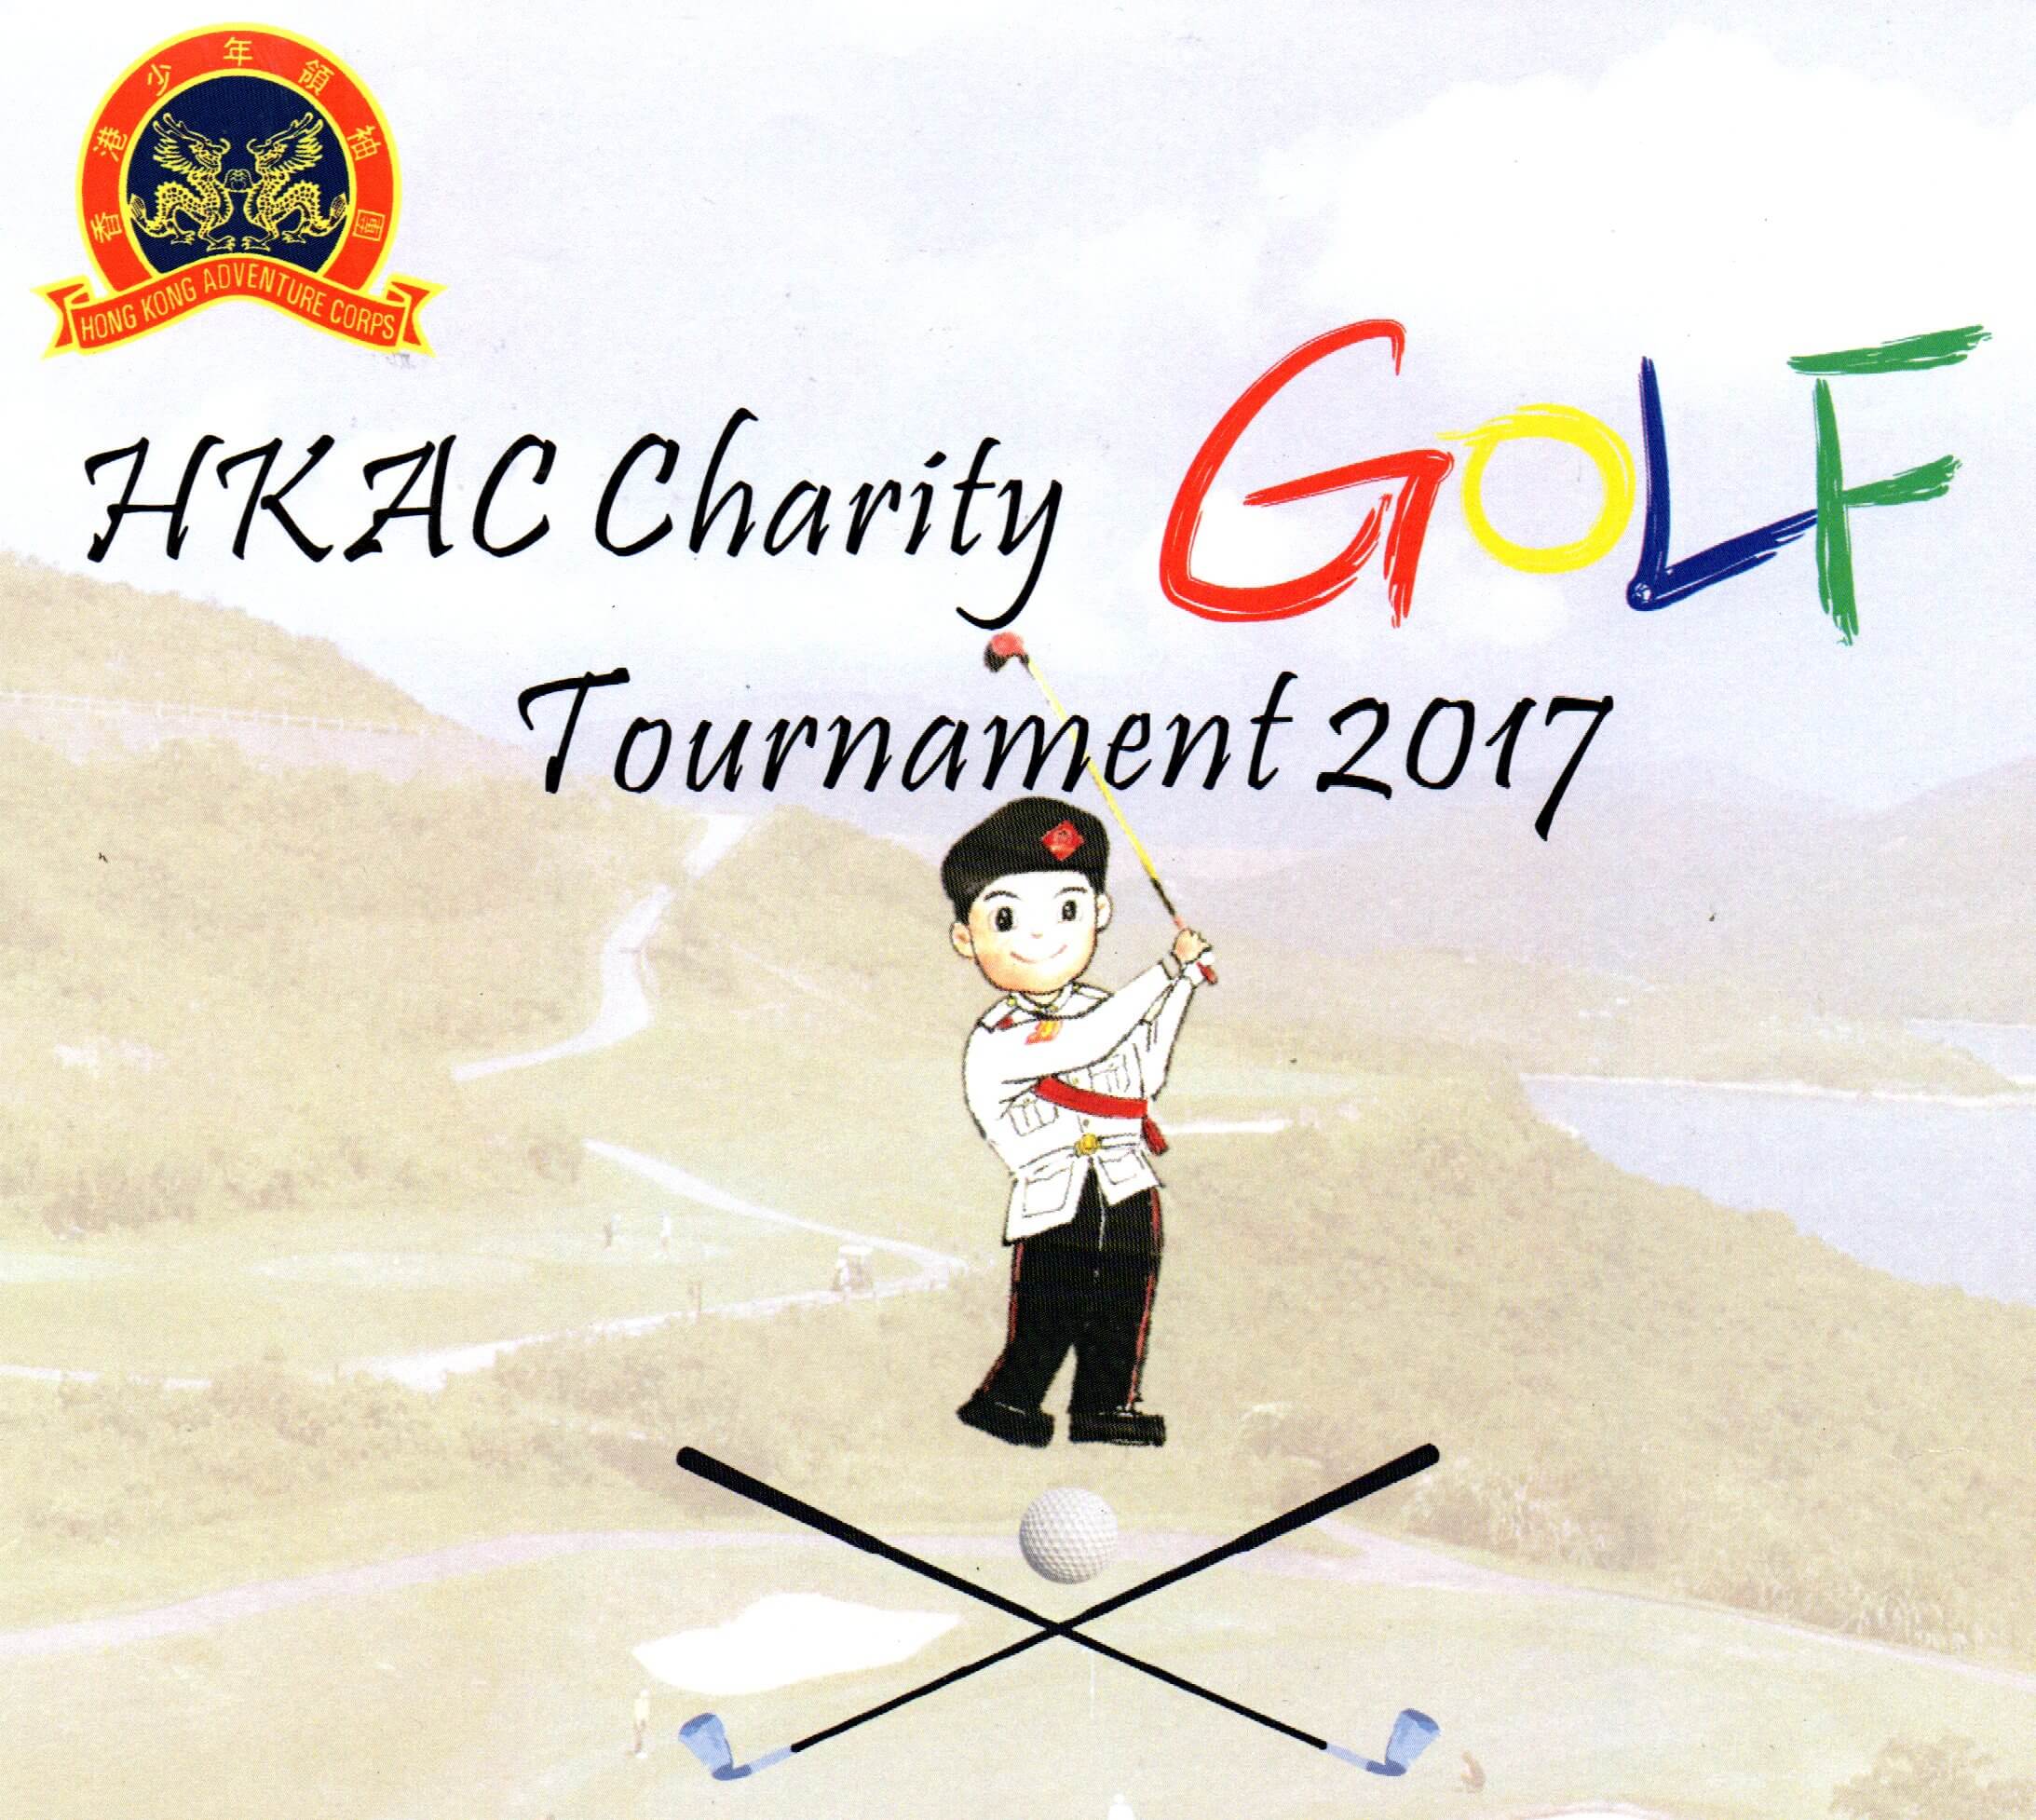 HKAC Charity Golf Tournament 2017